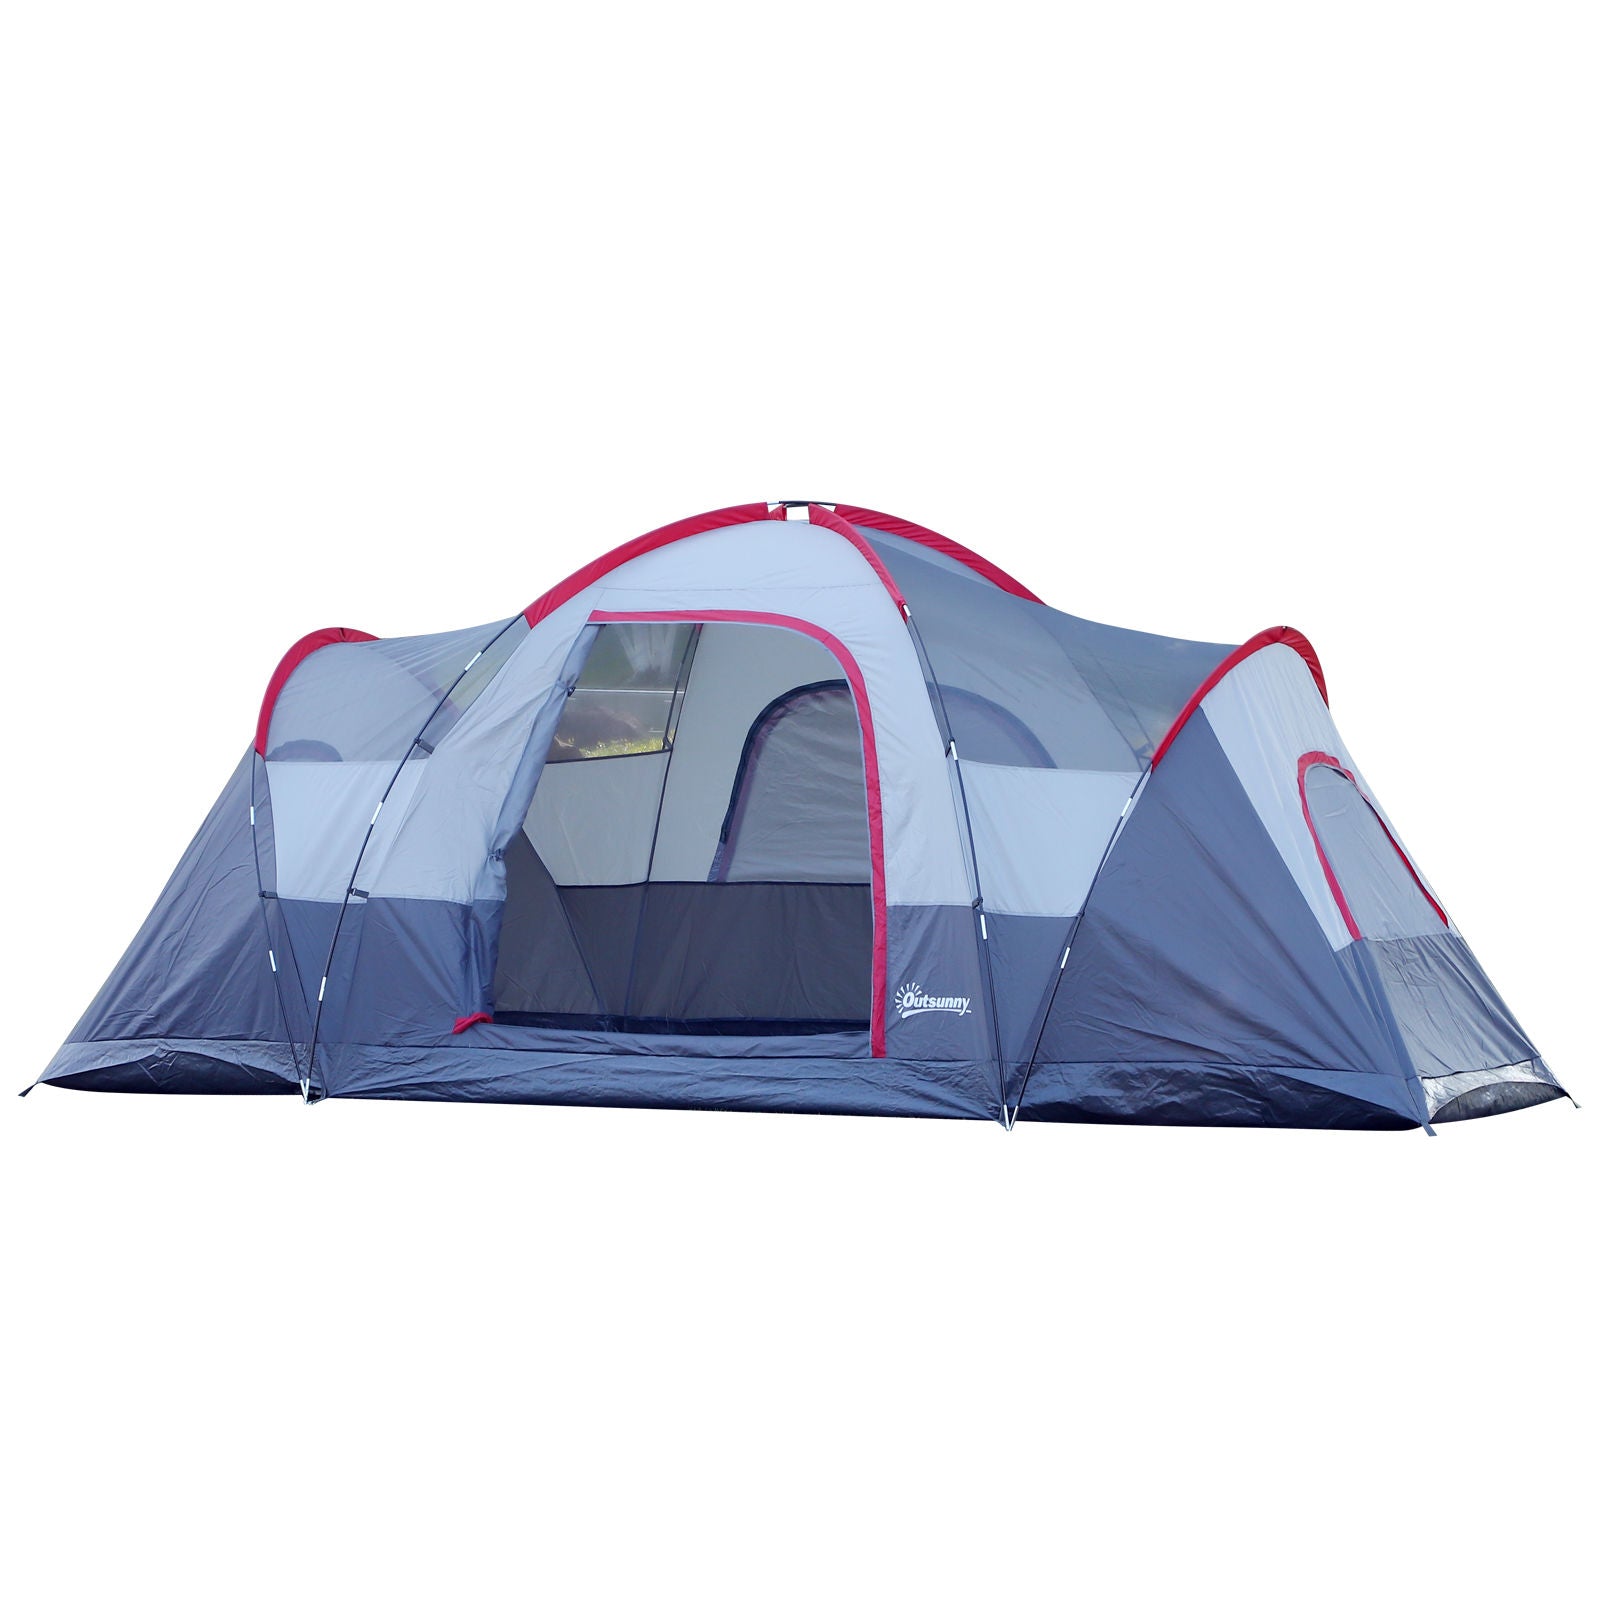 Tente de camping Nancy's Neustadt - Tente de camping - Bleu / Gris - 455 x 230 x 180 cm